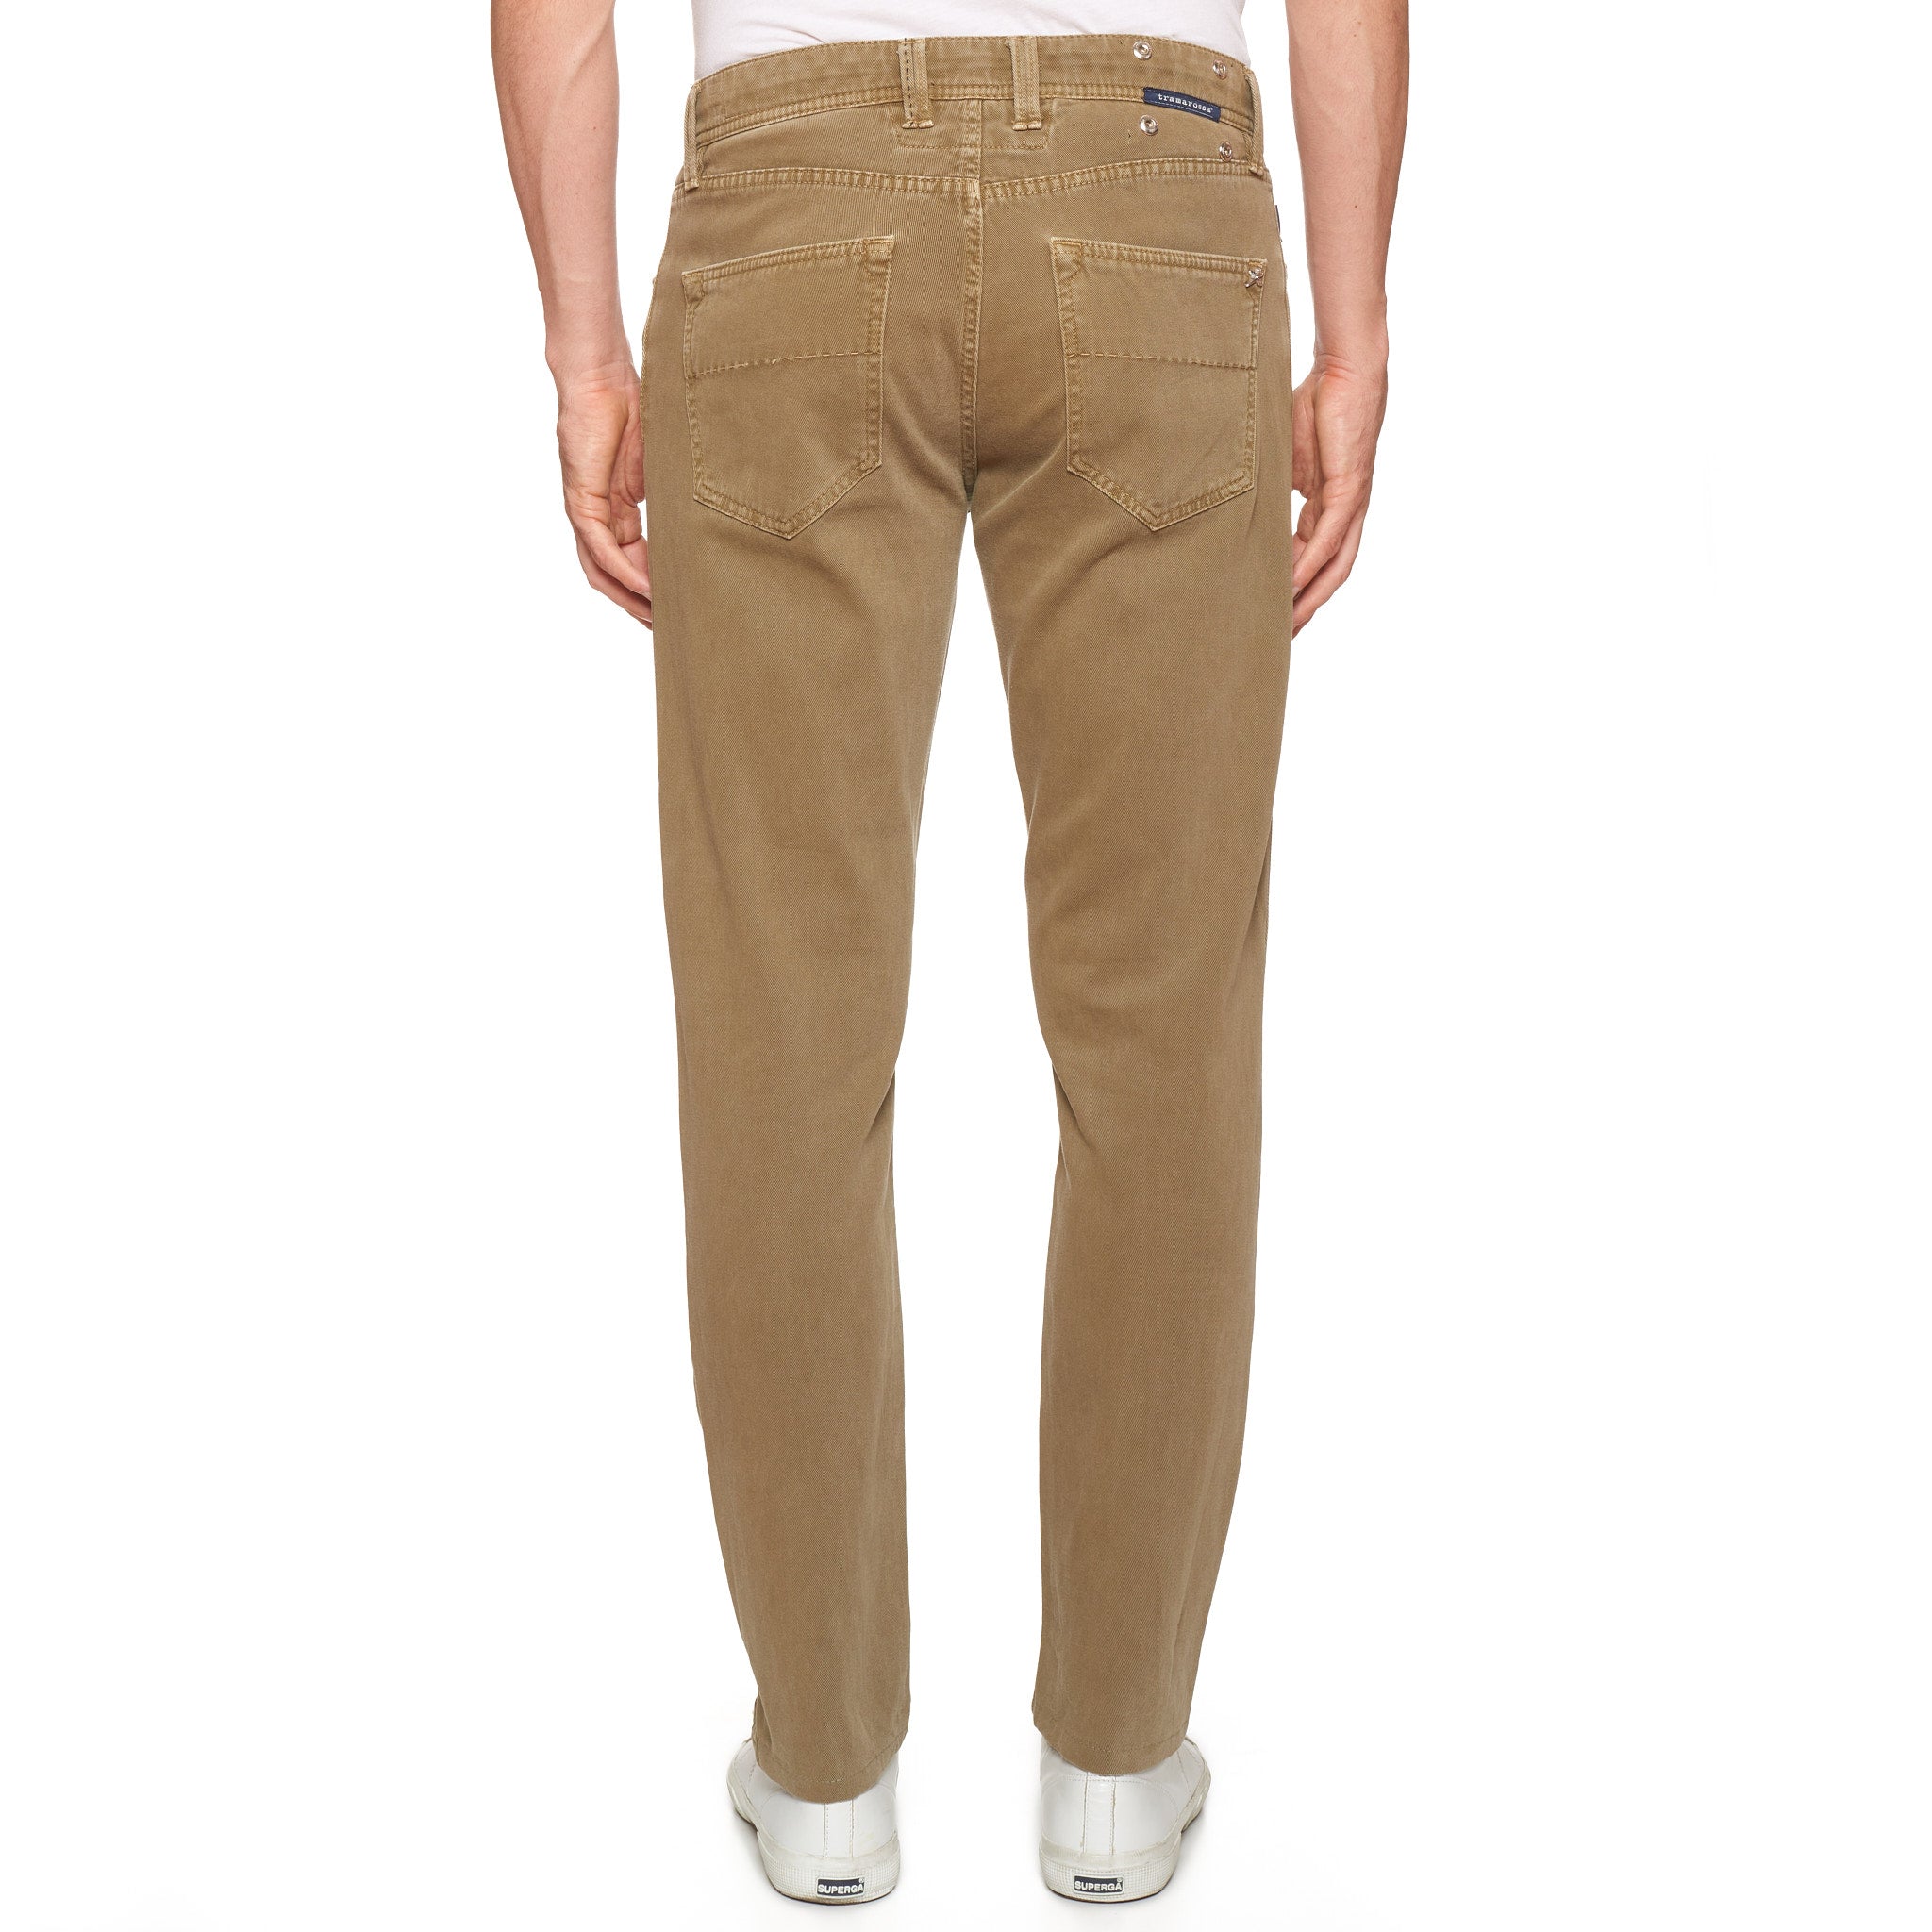 TRAMAROSSA Colour Leonardo Khaki Cotton Stretch Slim Fit Jeans Pants Size 33 TRAMAROSSA